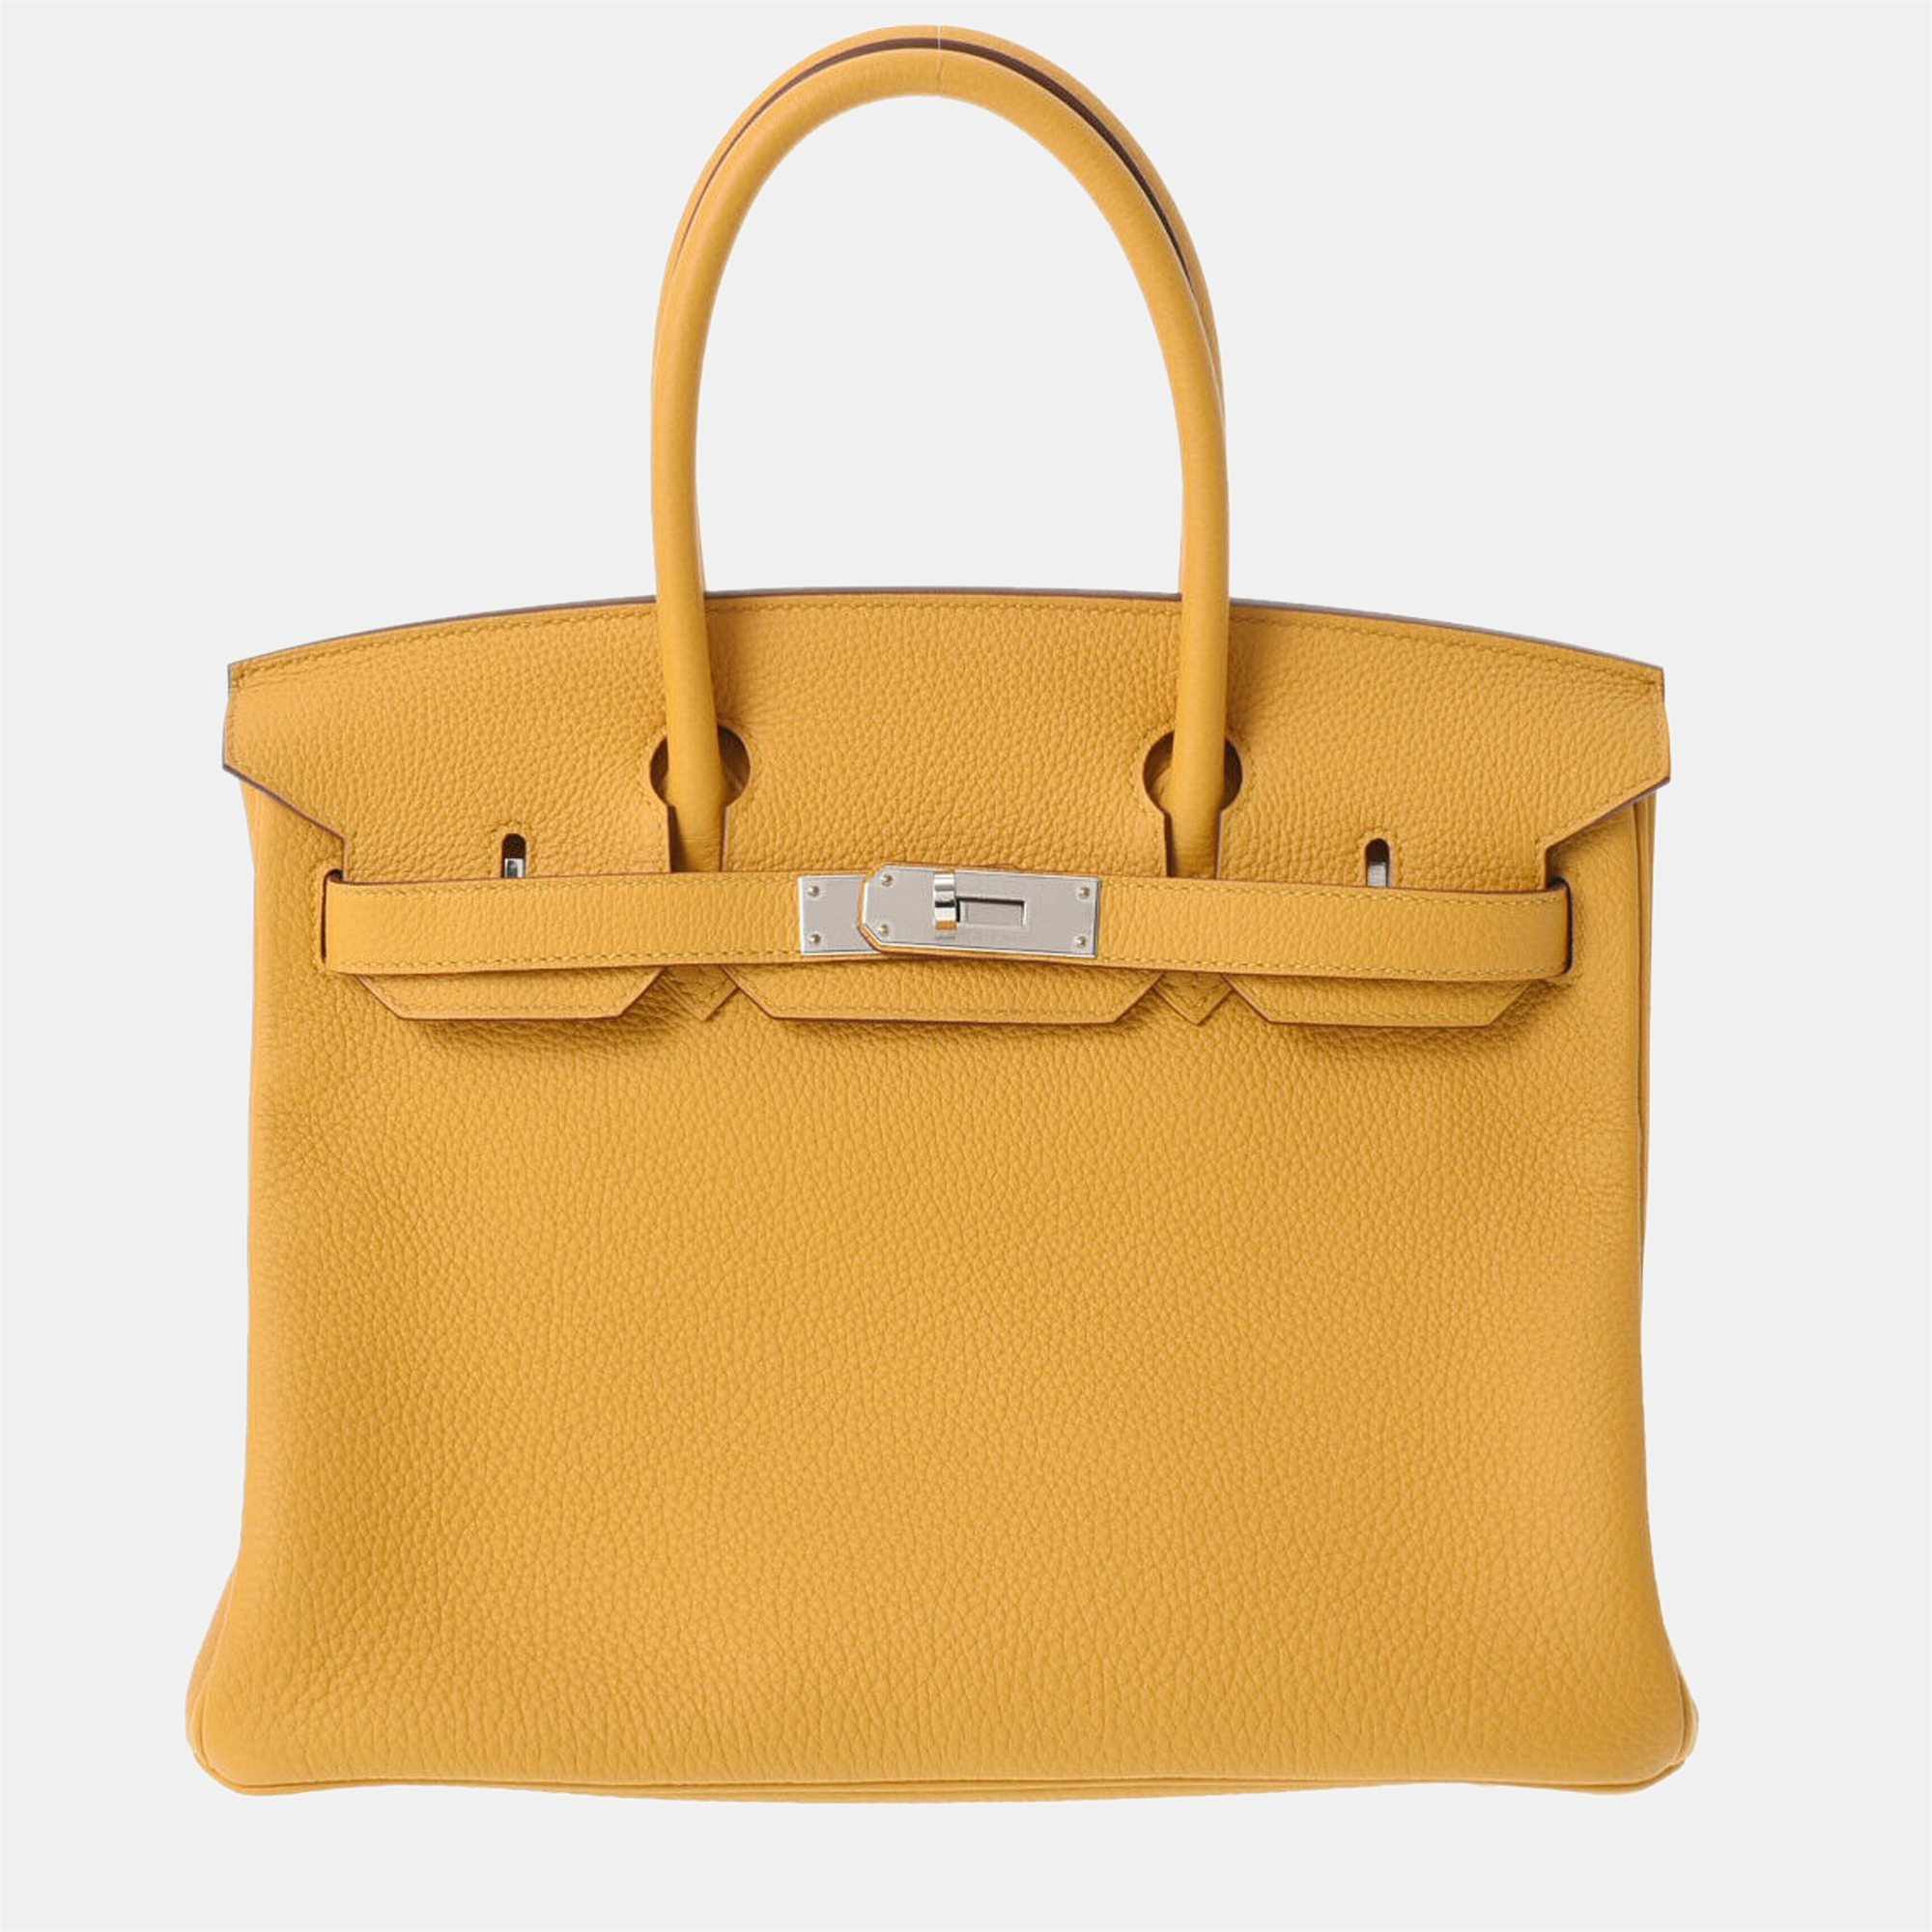 Hermes Yellow Togo Leather Palladium Hardware Birkin 30 Bag